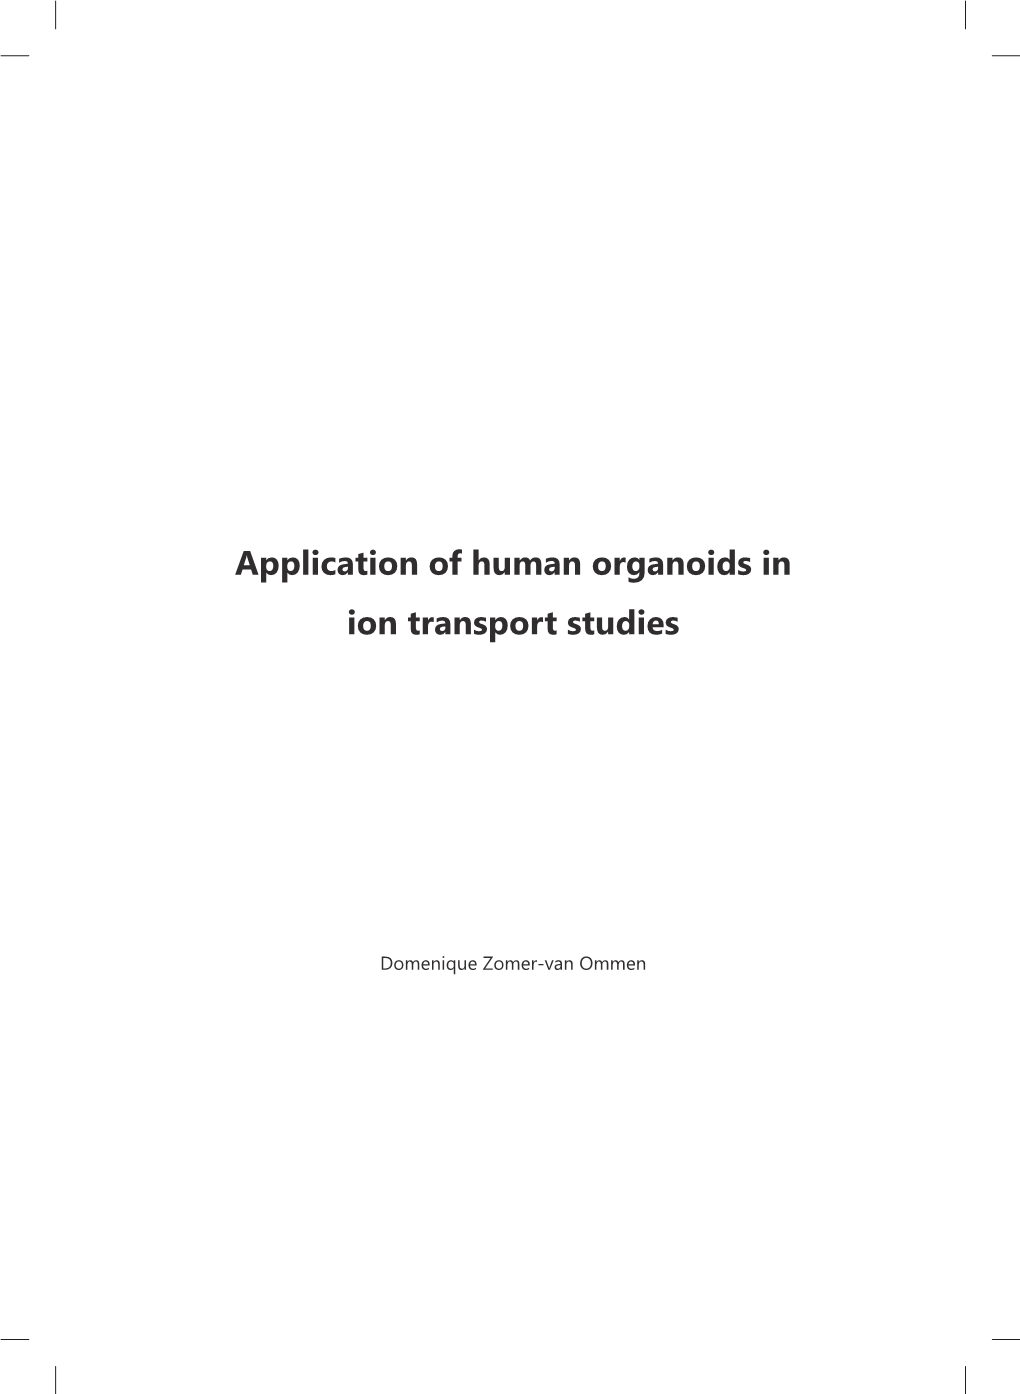 Application of Human Organoids in Ion Transport Studies